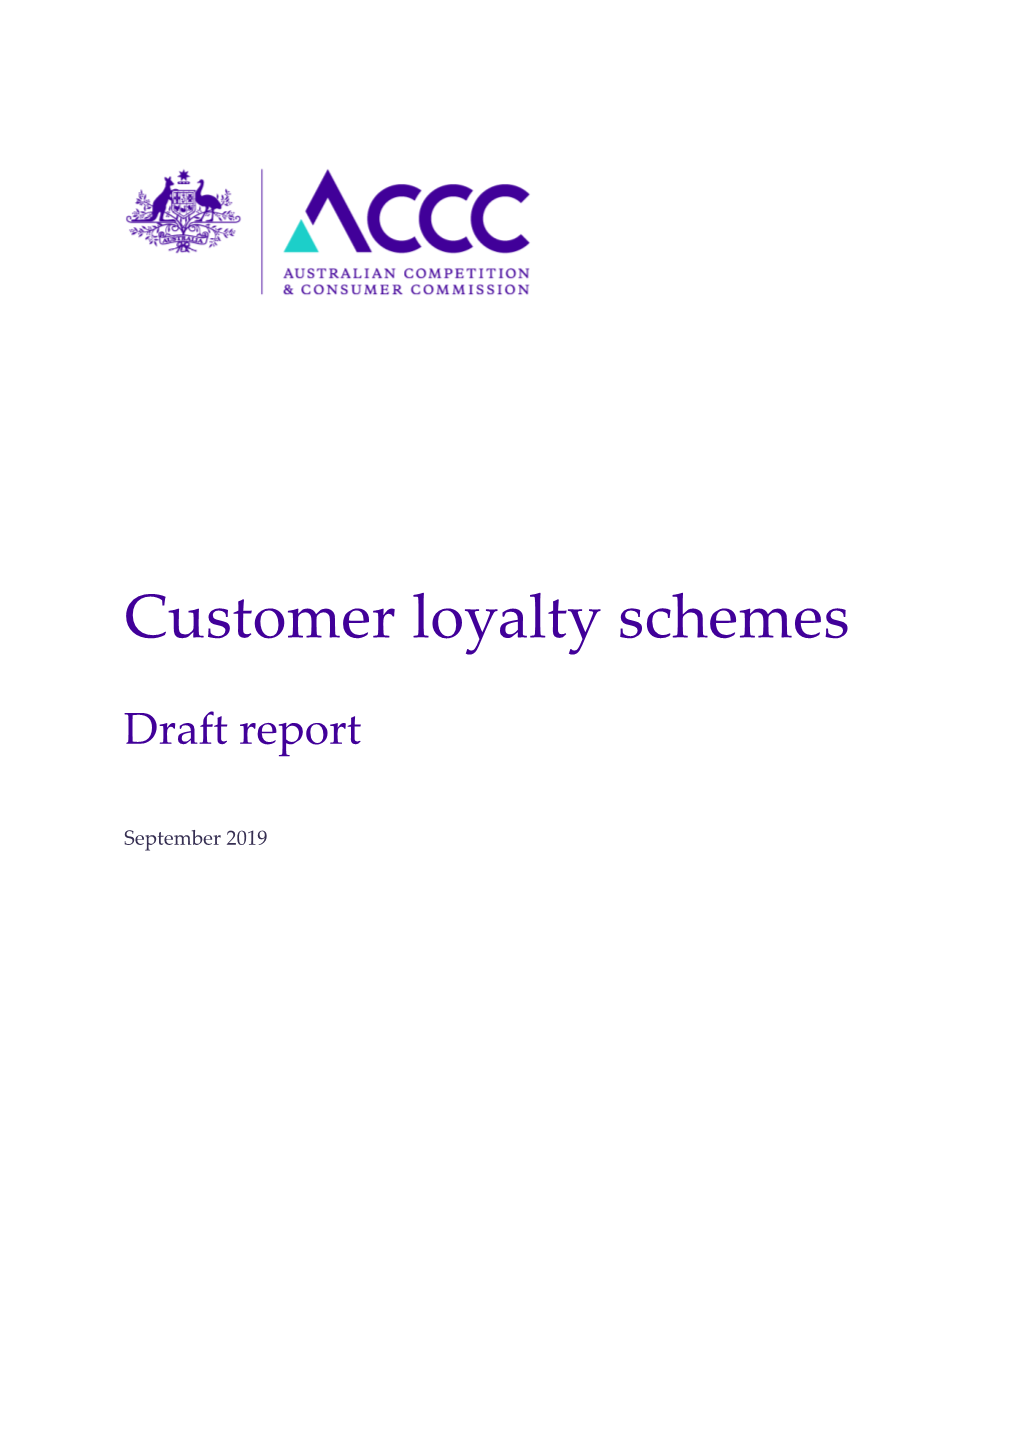 Customer Loyalty Schemes: Draft Report